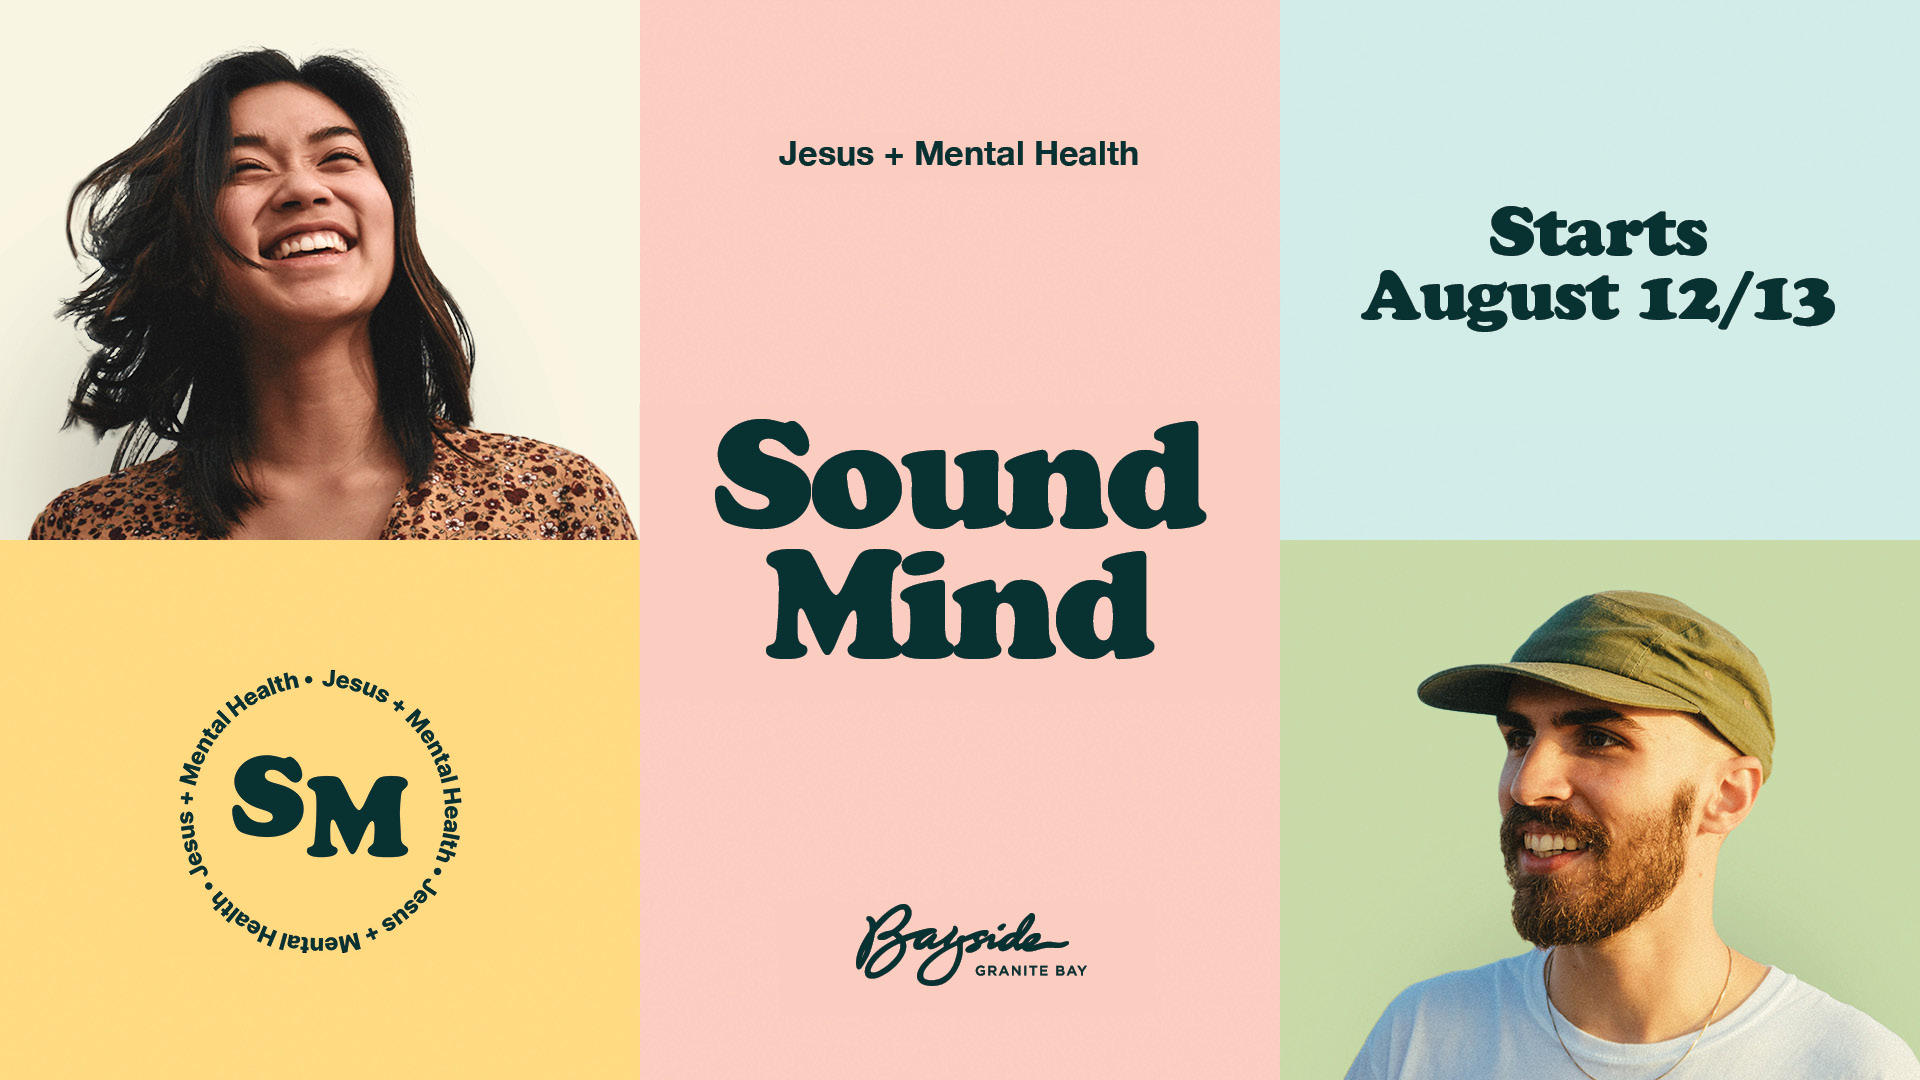 SOUND MIND: Jesus + Mental Health